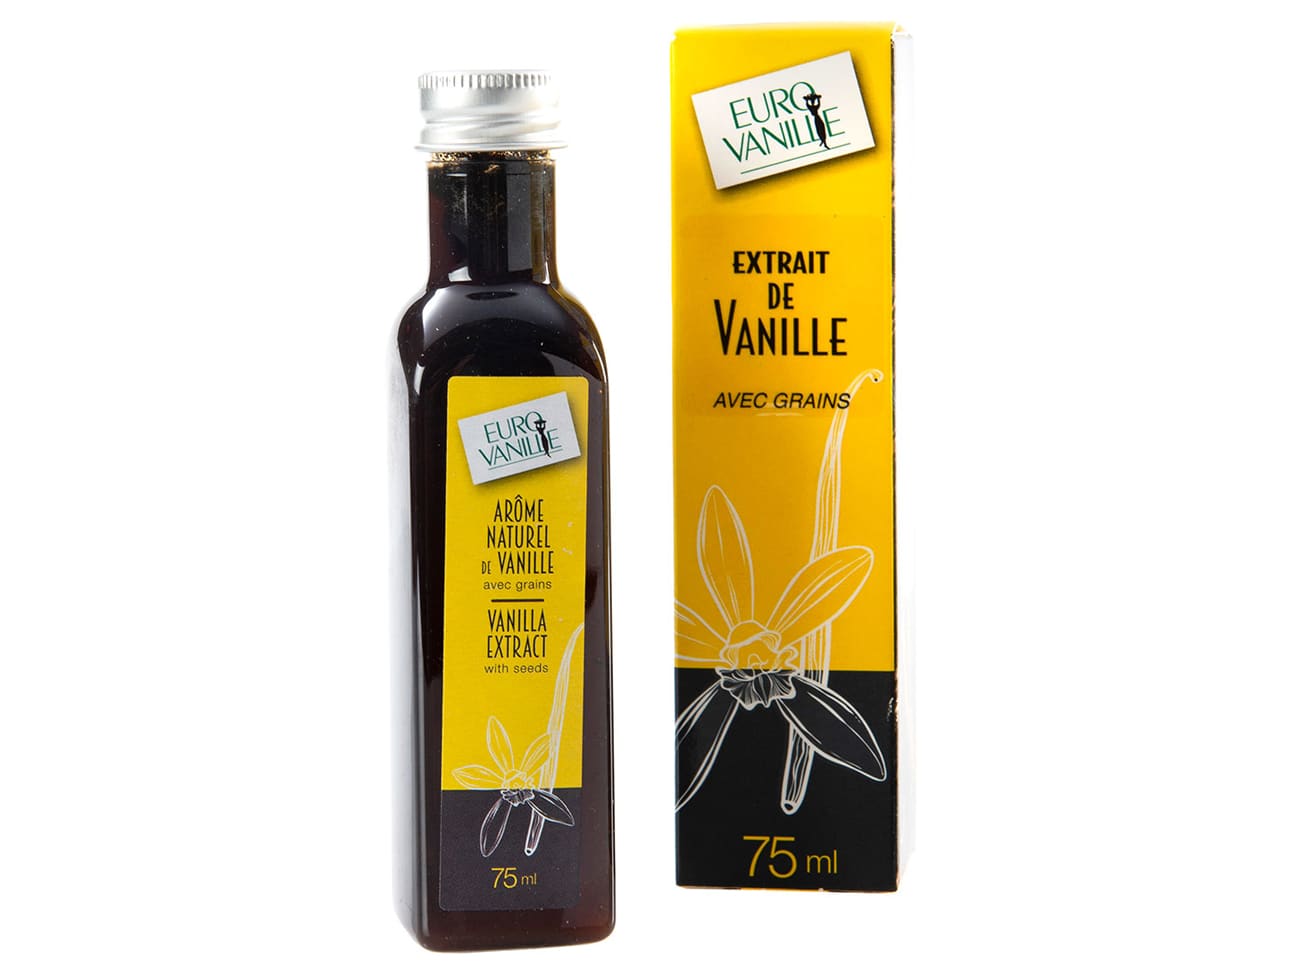 Arôme Vanille Artificiel, 200 ml